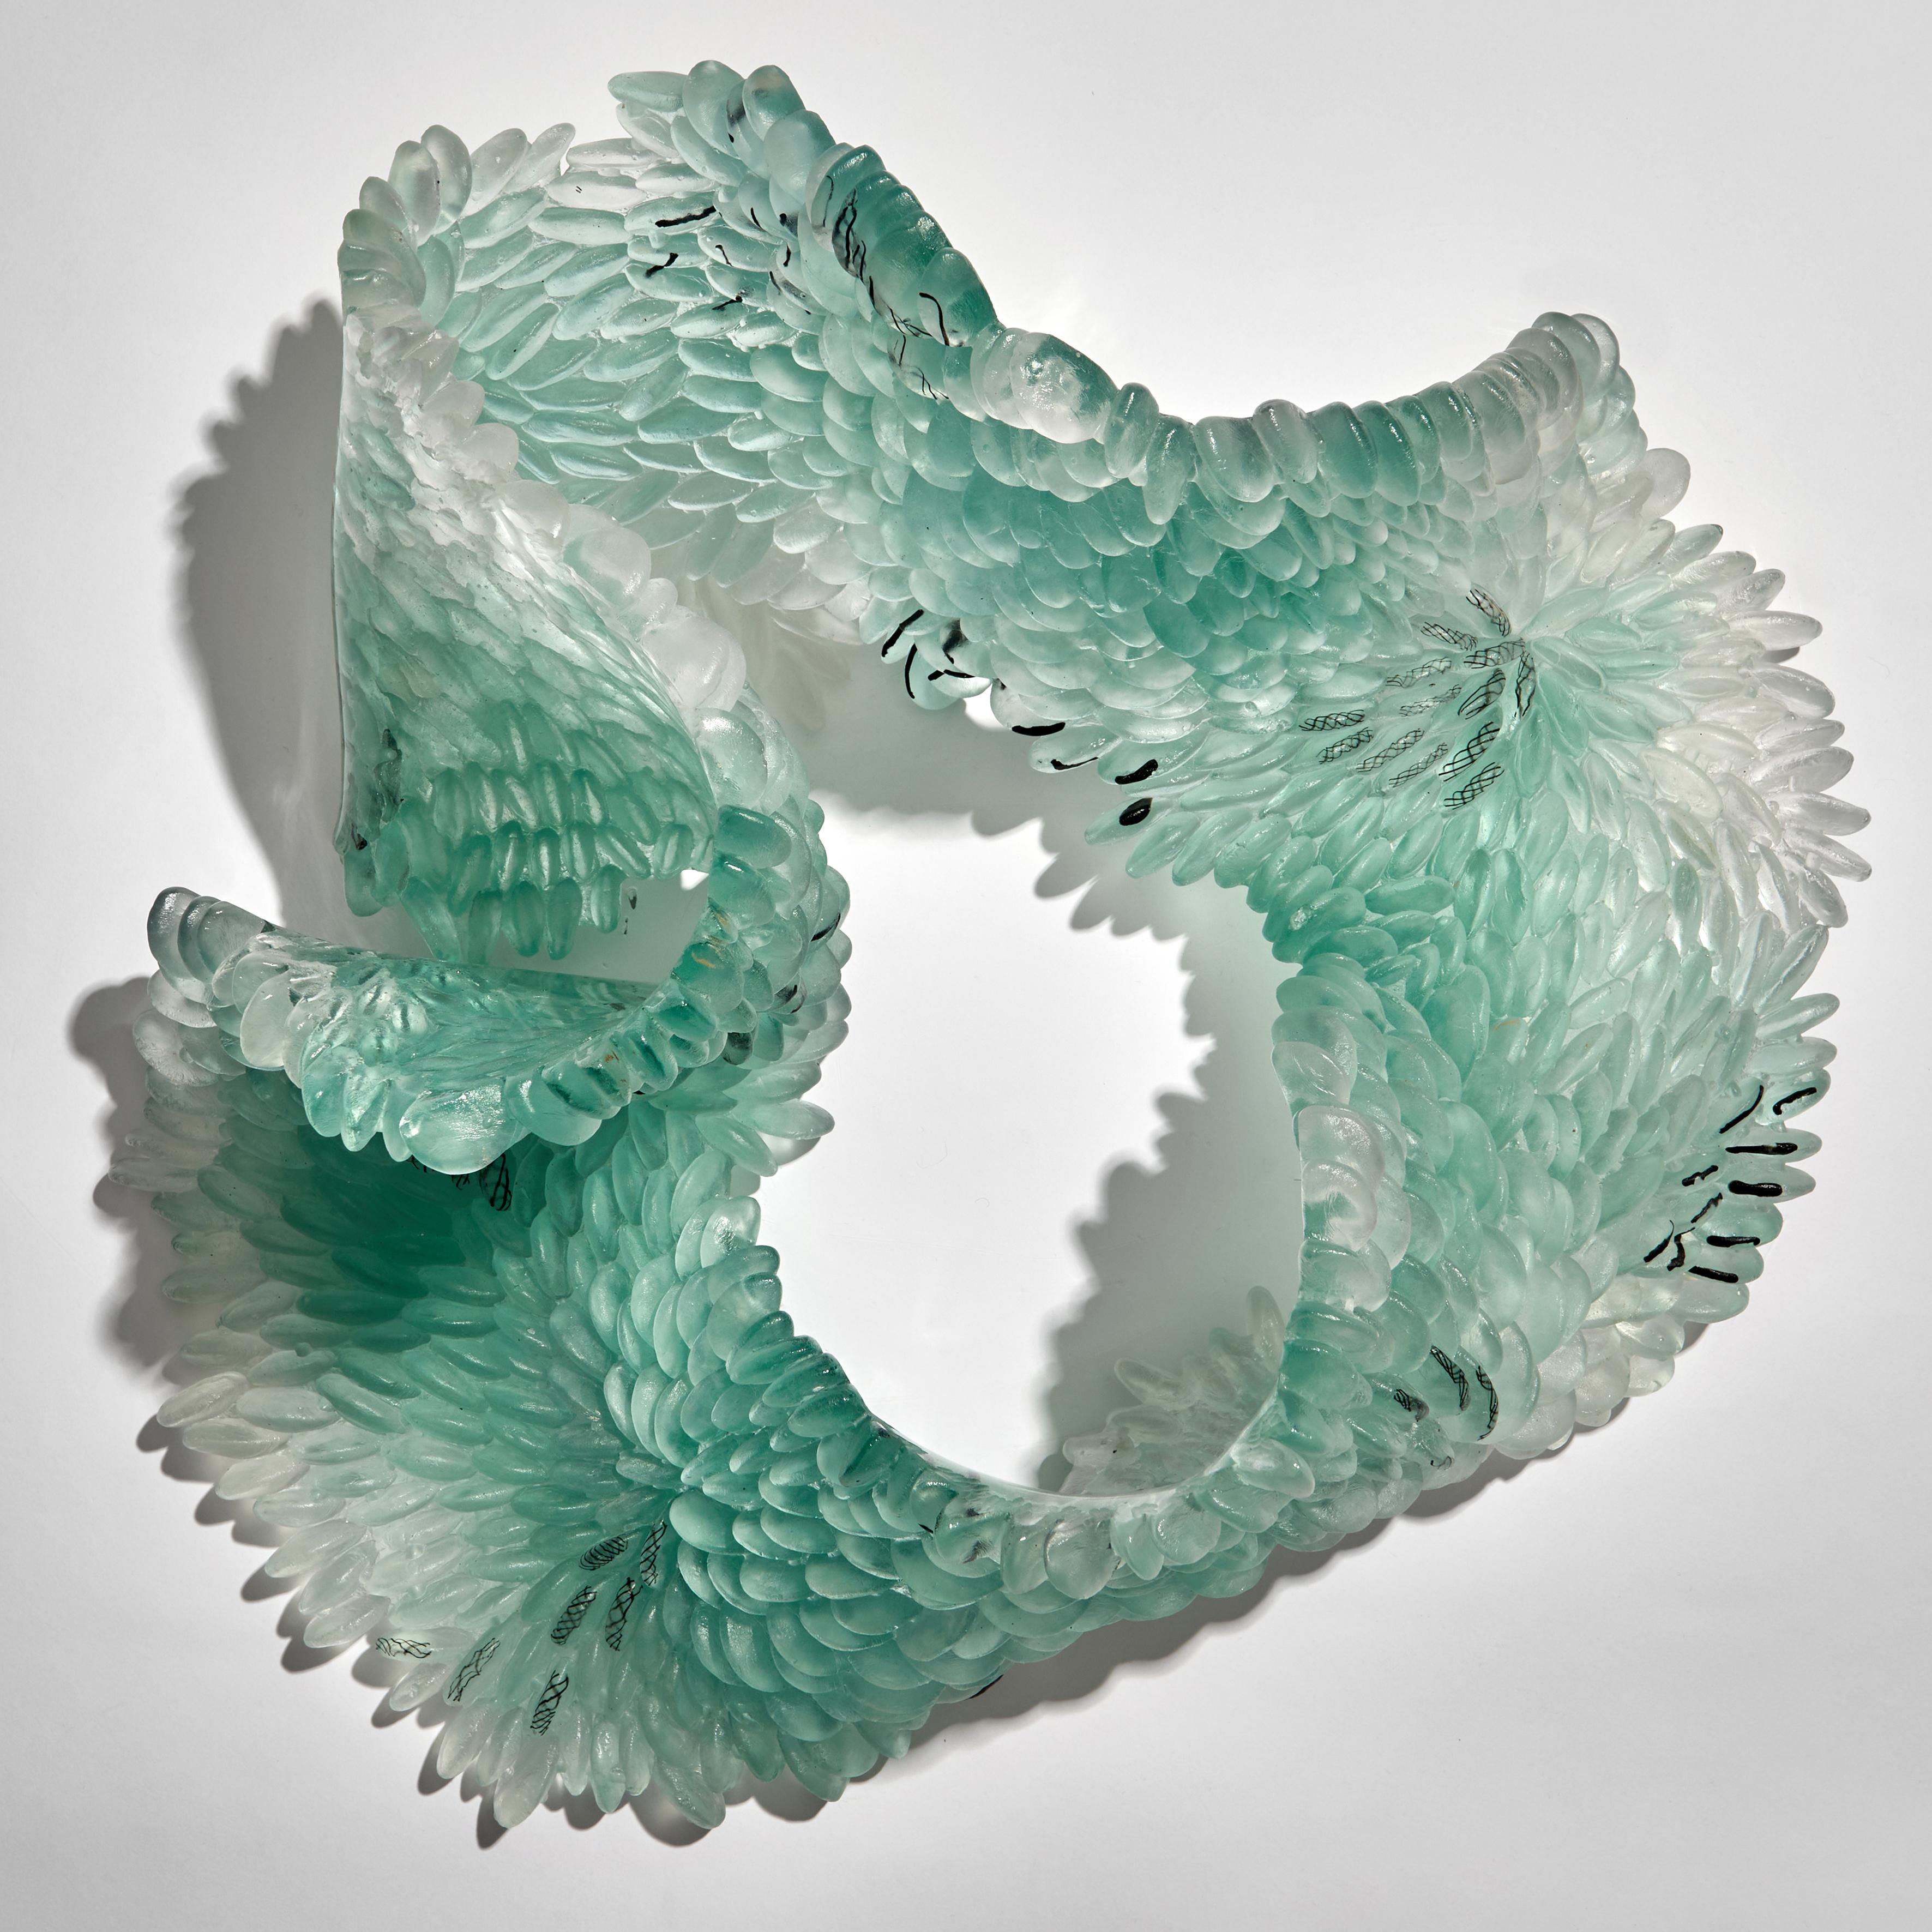 Pale Lichen, Unique Glass Sculpture in Jade and Grey by Nina Casson McGarva 3